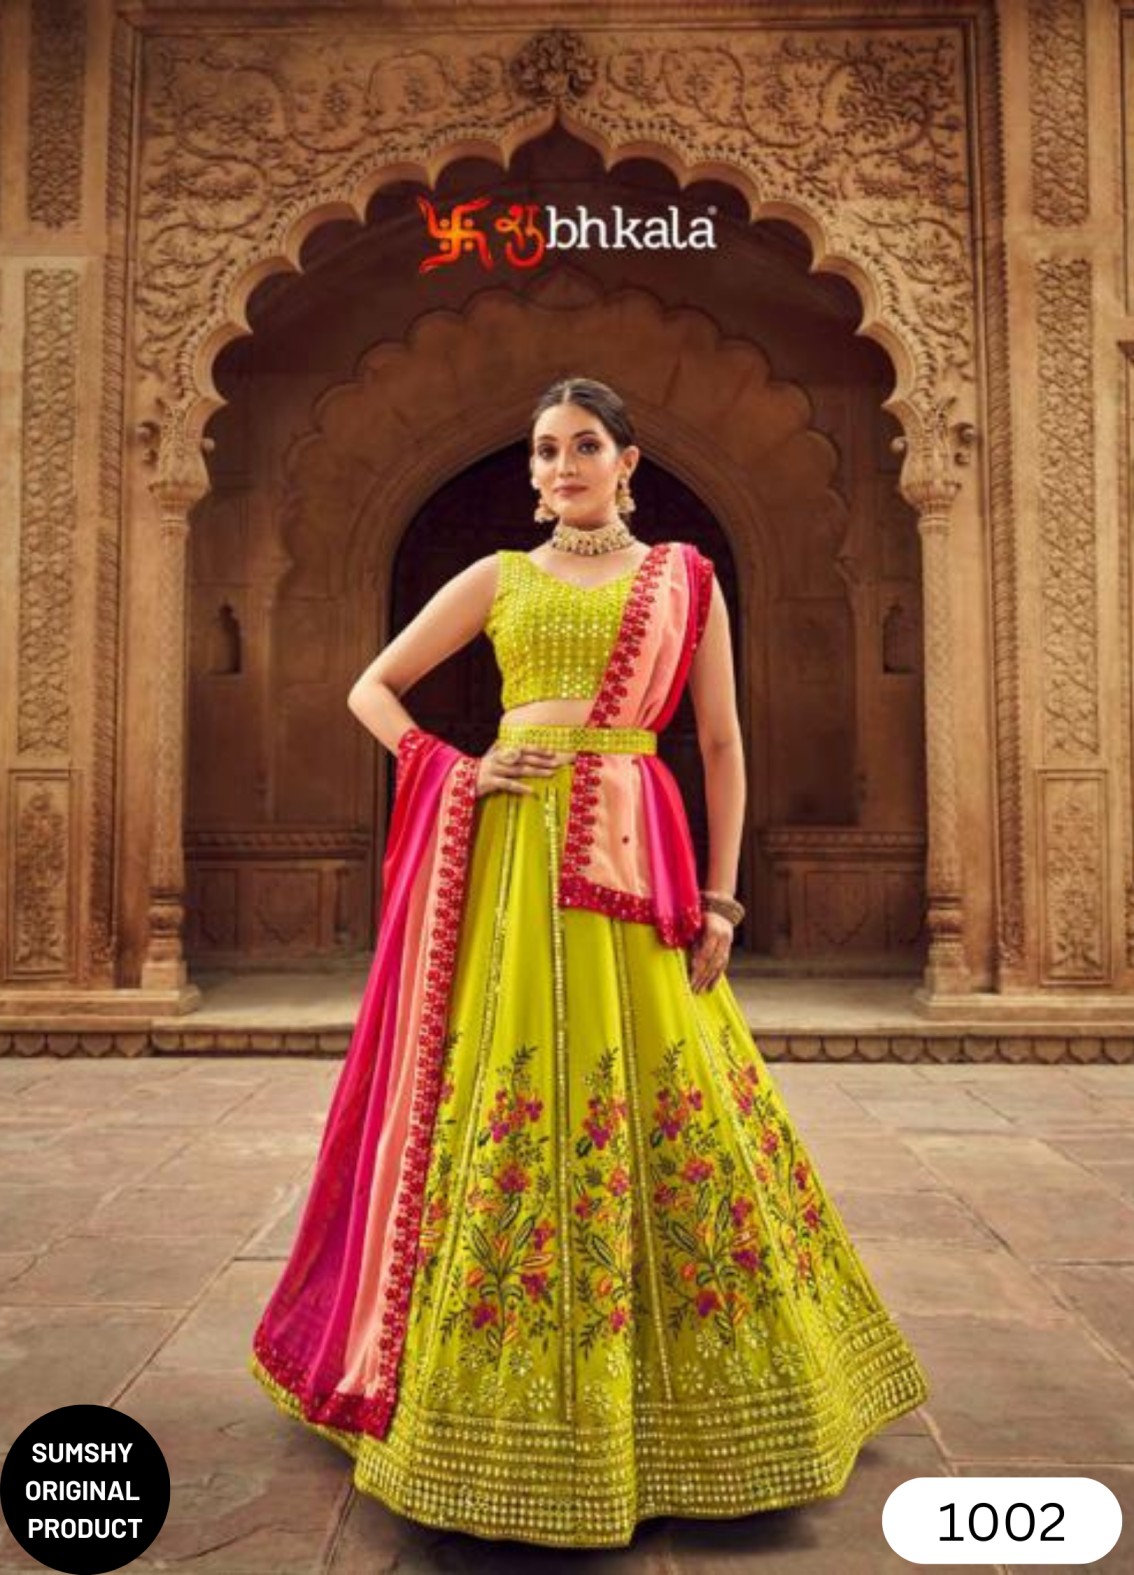 Designer Lehenga Choli - Fancy Dress Costumes at Rs 700 in Greater Noida |  ID: 2851978142330